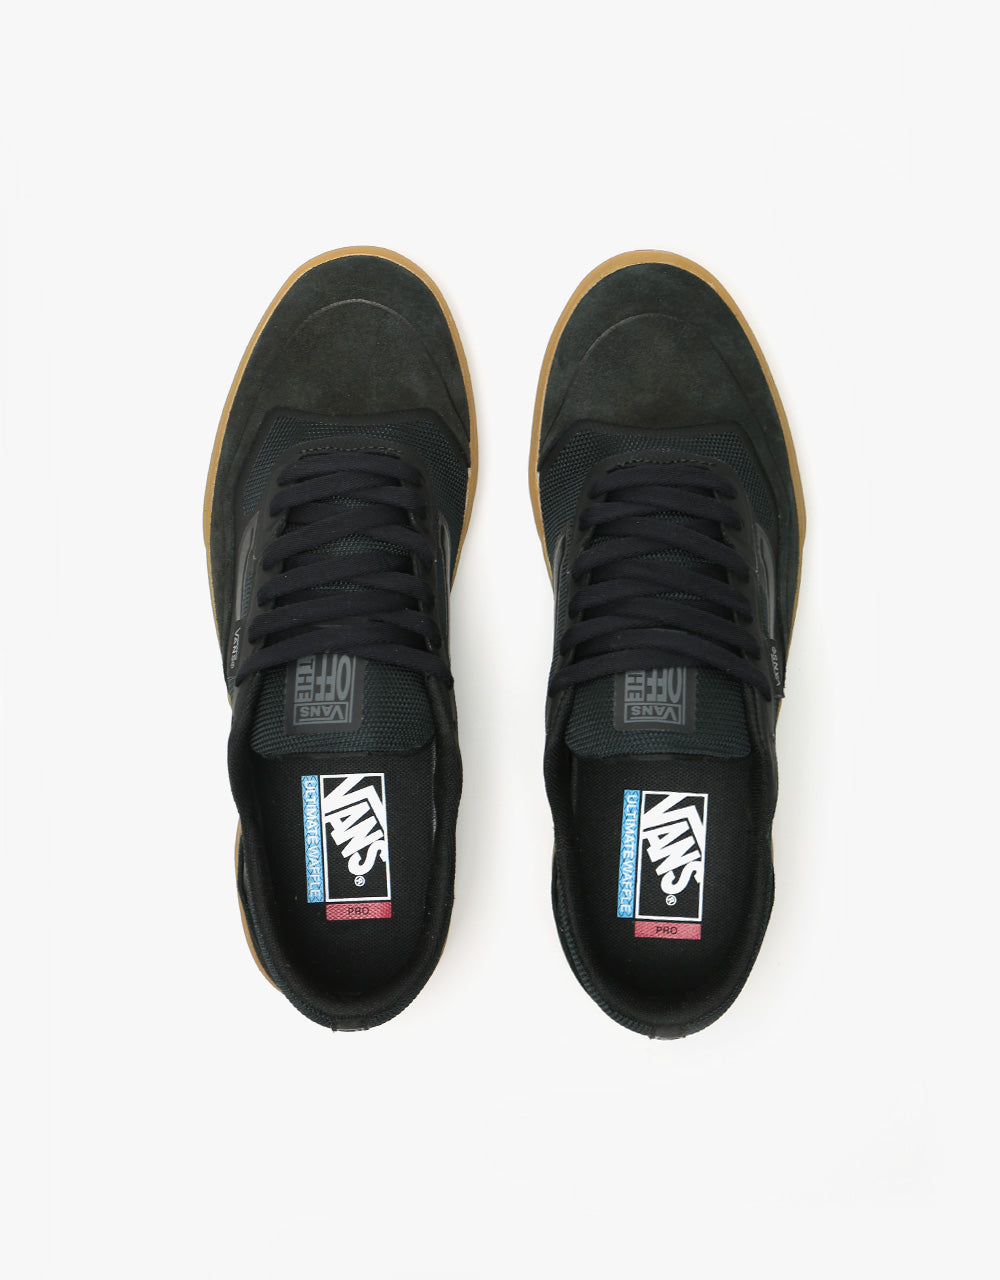 Vans AVE Pro Skate Shoes - Black/Gum